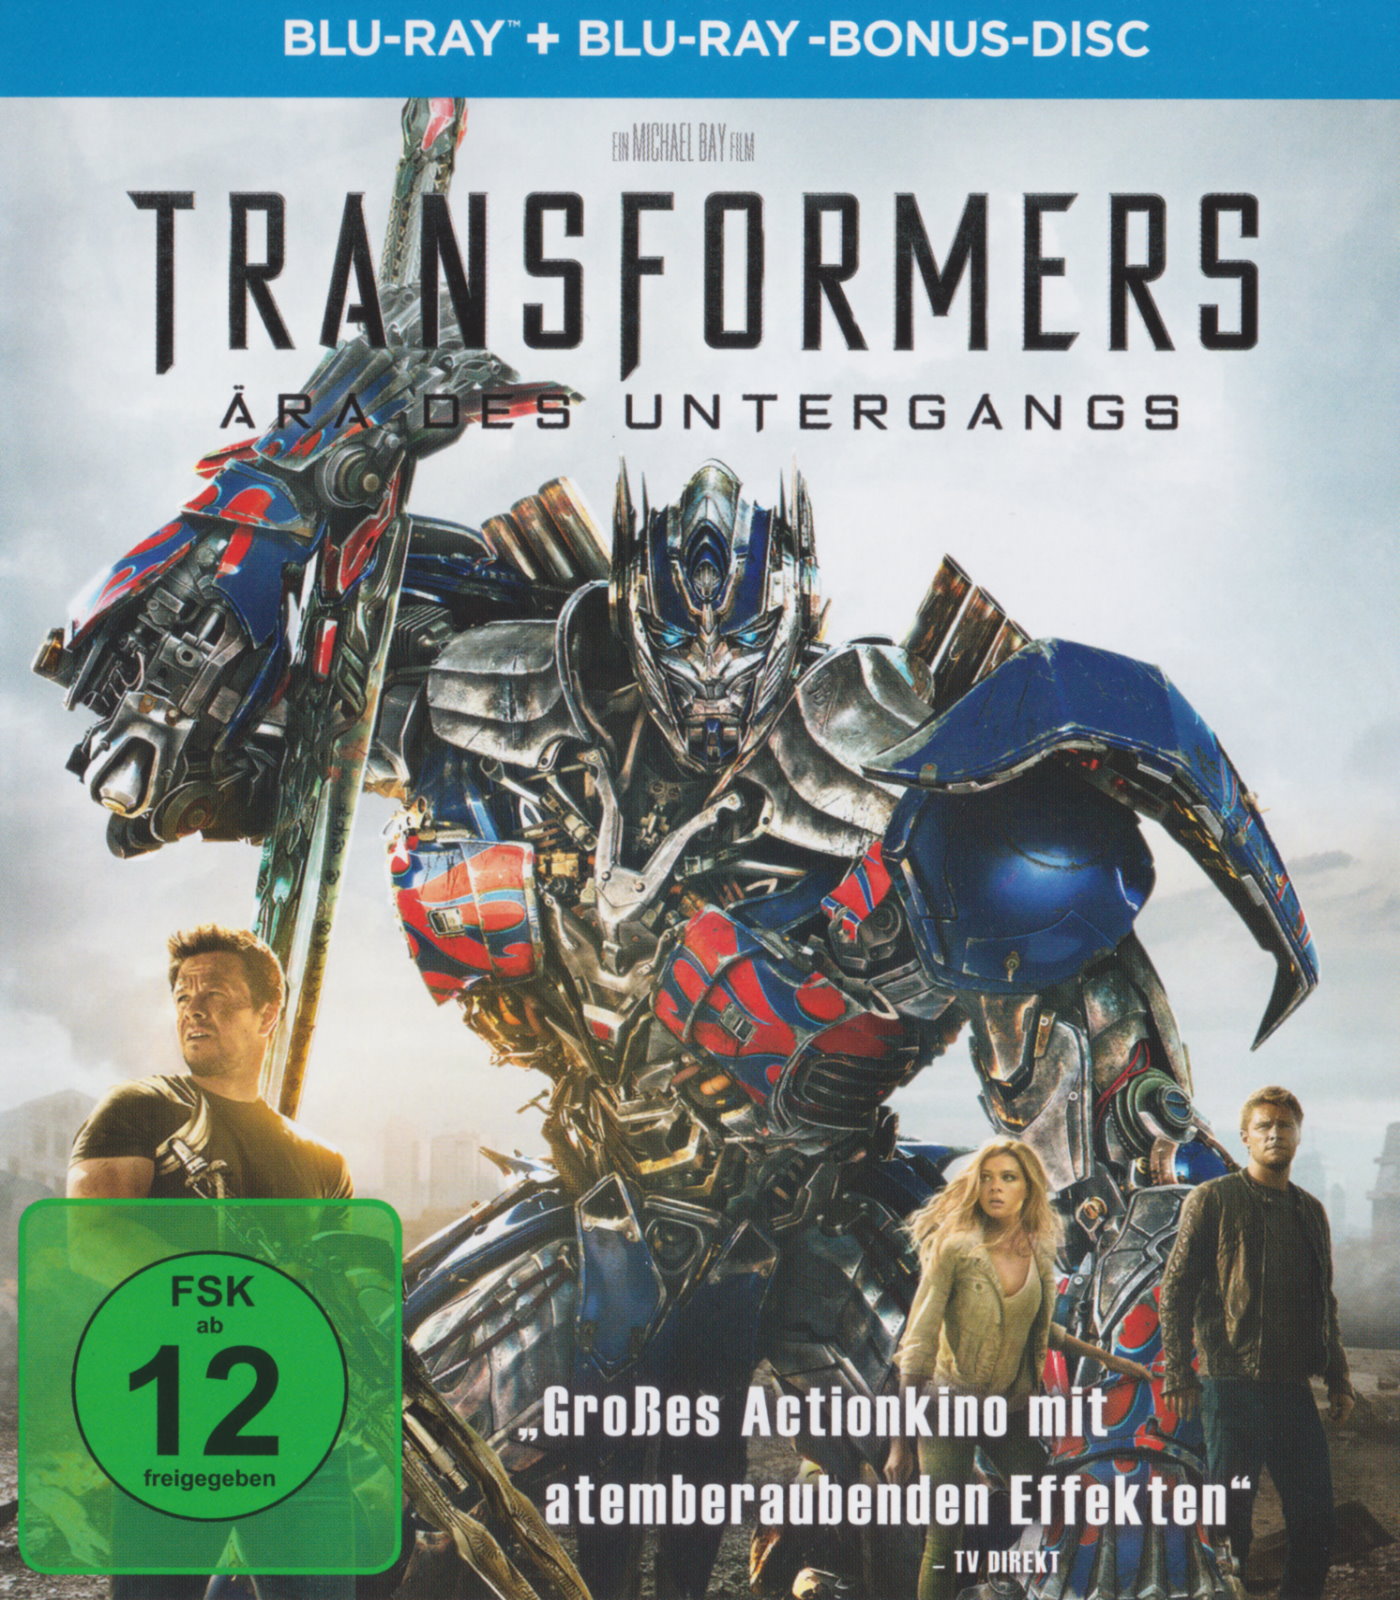 Cover - Transformers - Ära des Untergangs.jpg